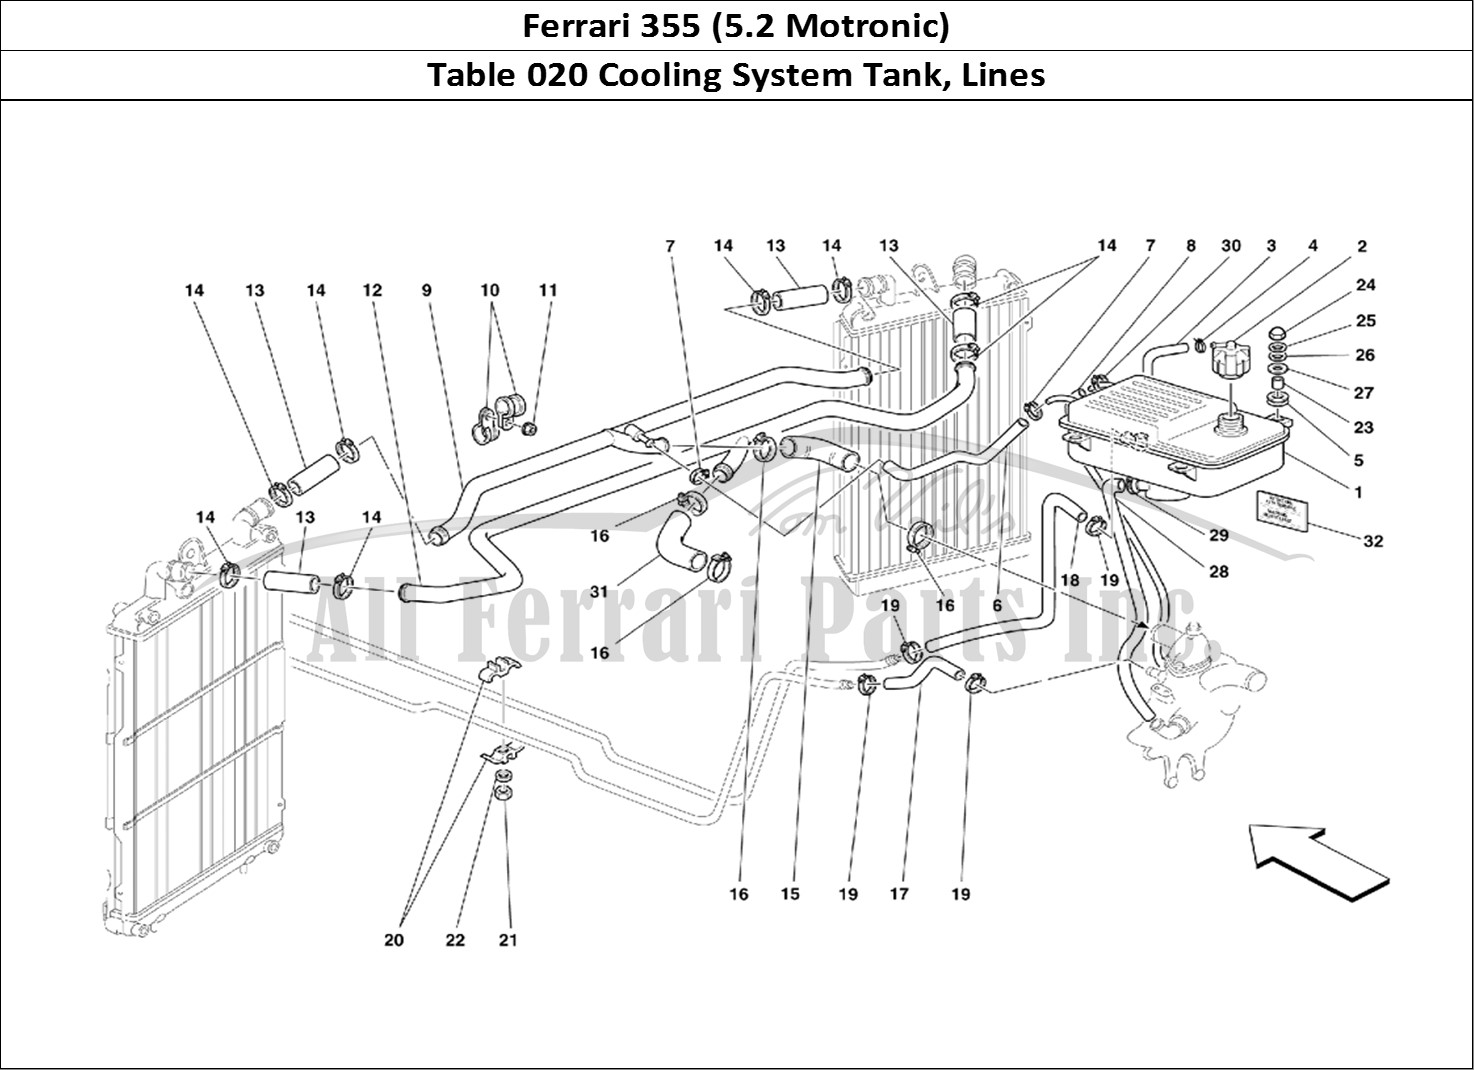 Ferrari Parts Ferrari 355 (5.2 Motronic) Page 020 Cooling System - Nourice